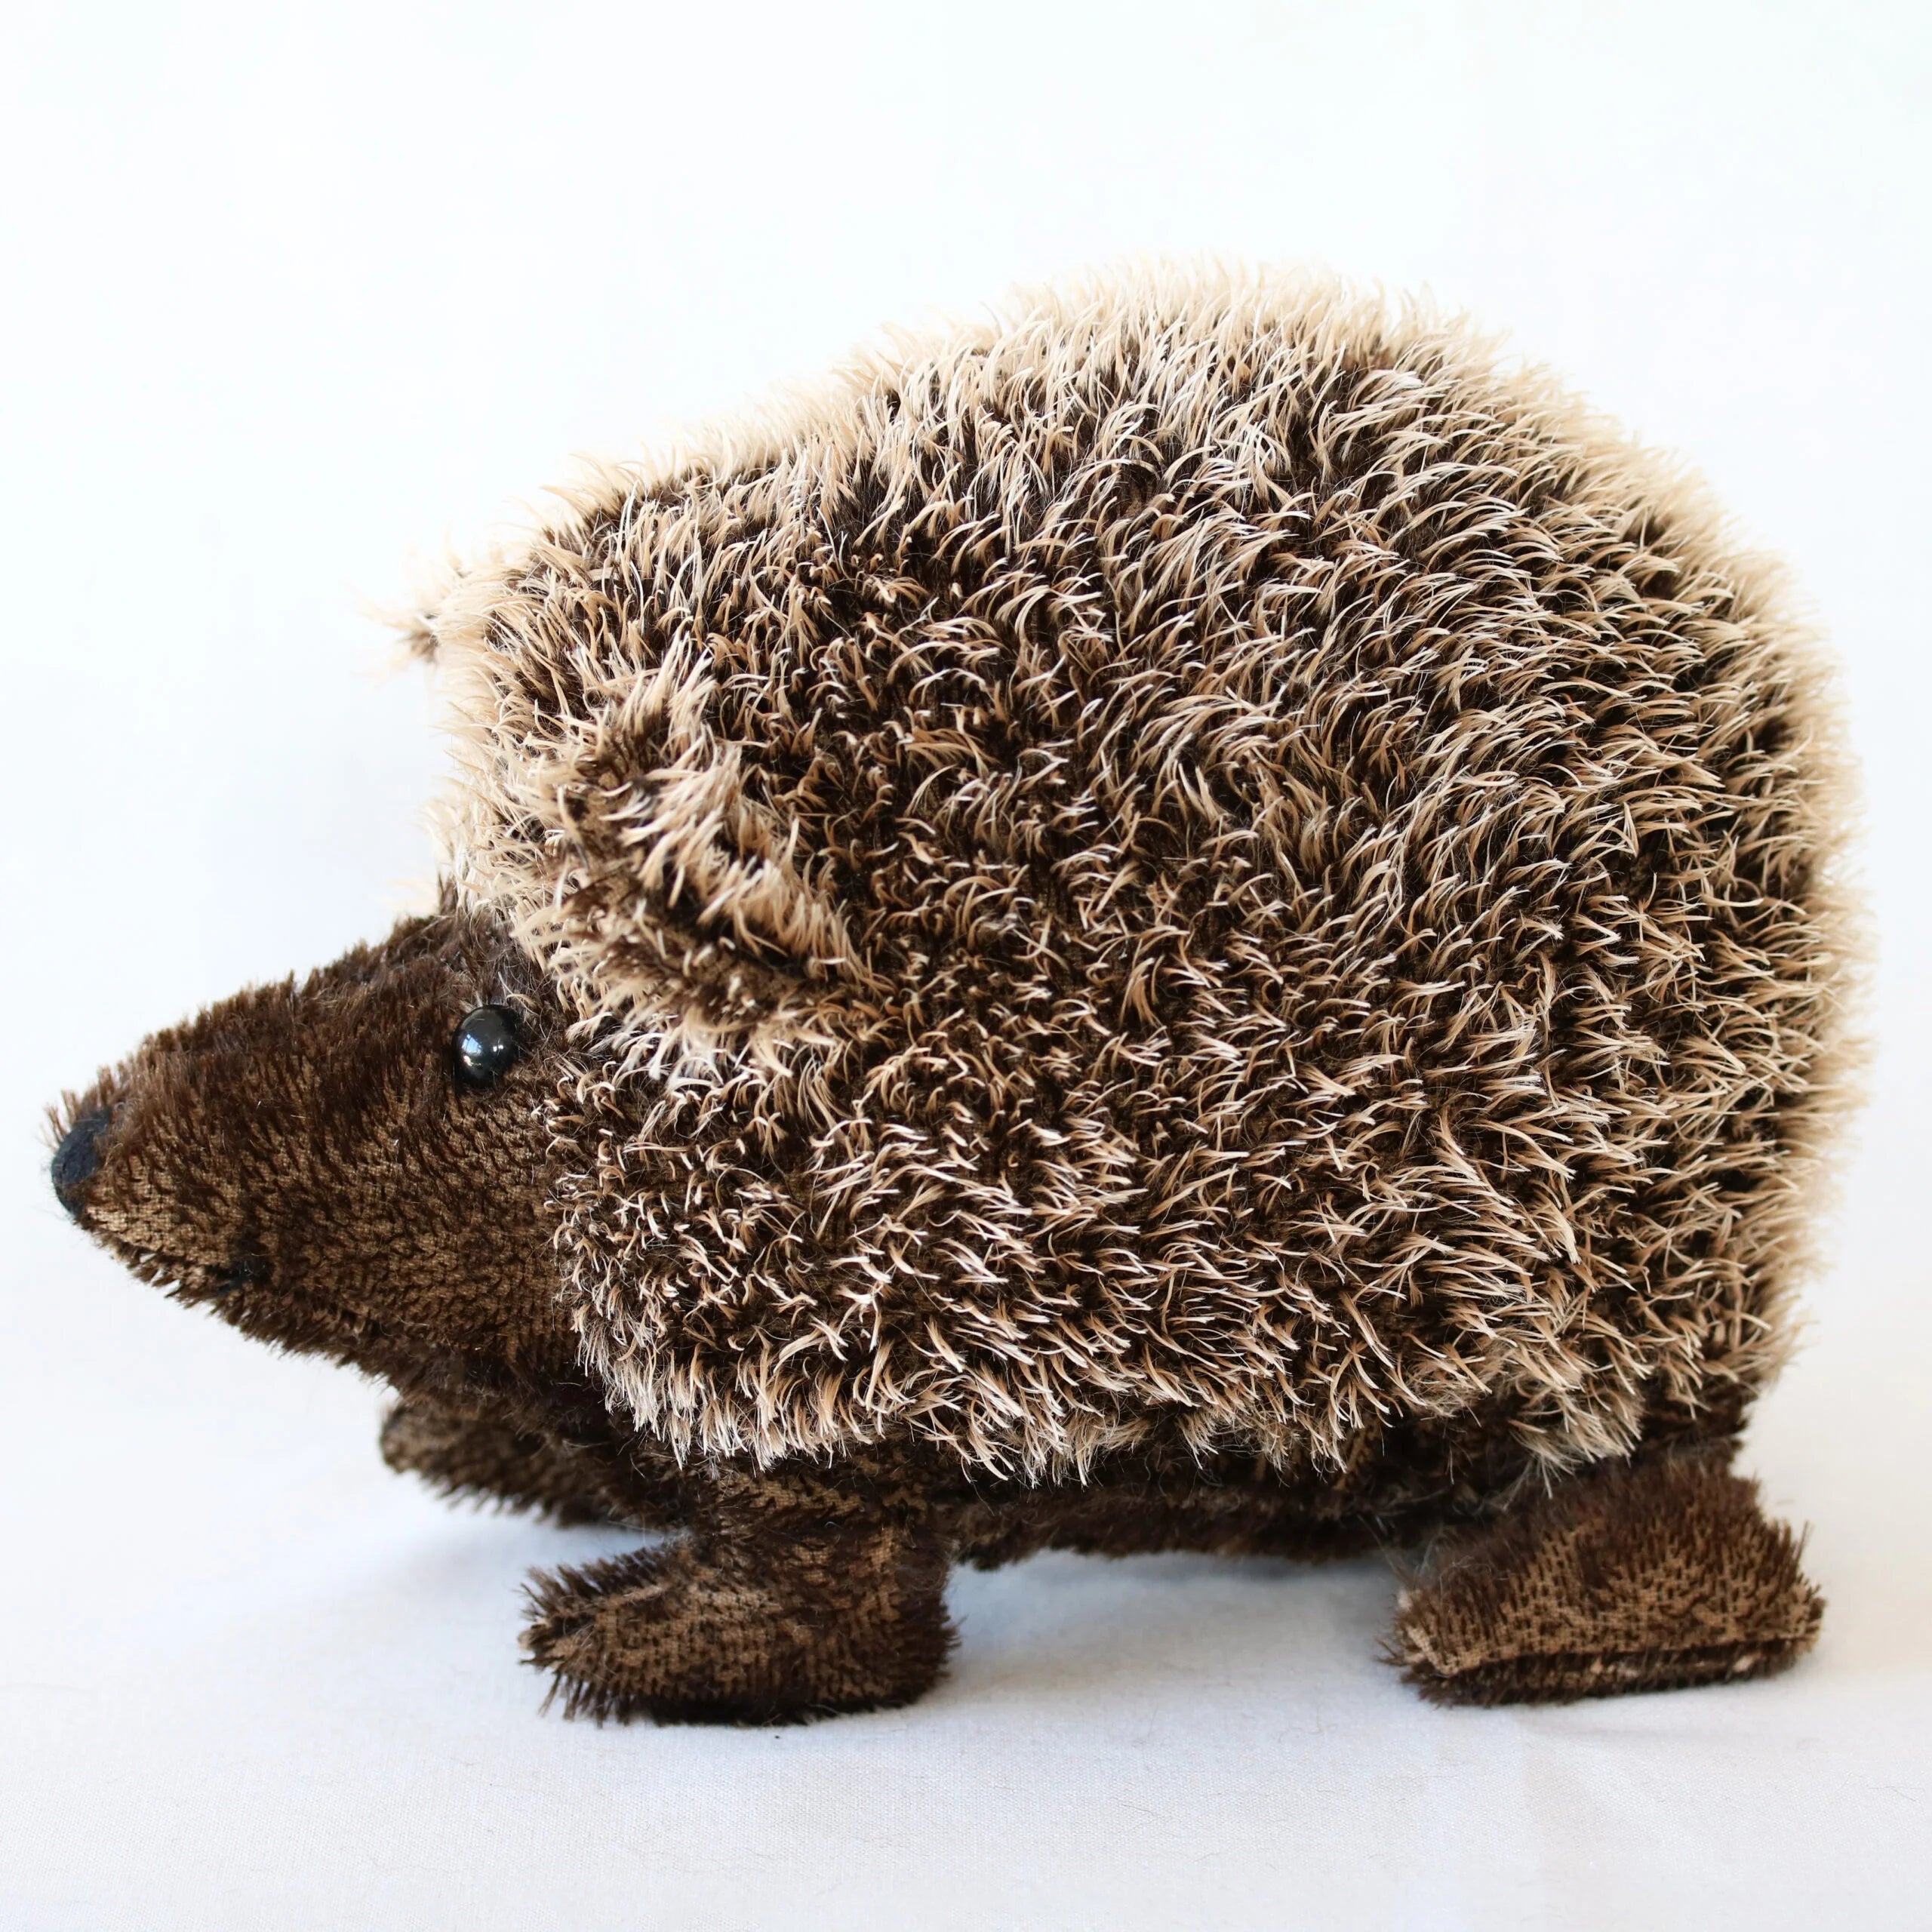 Horris the Hedgehog by Canterbury Bears